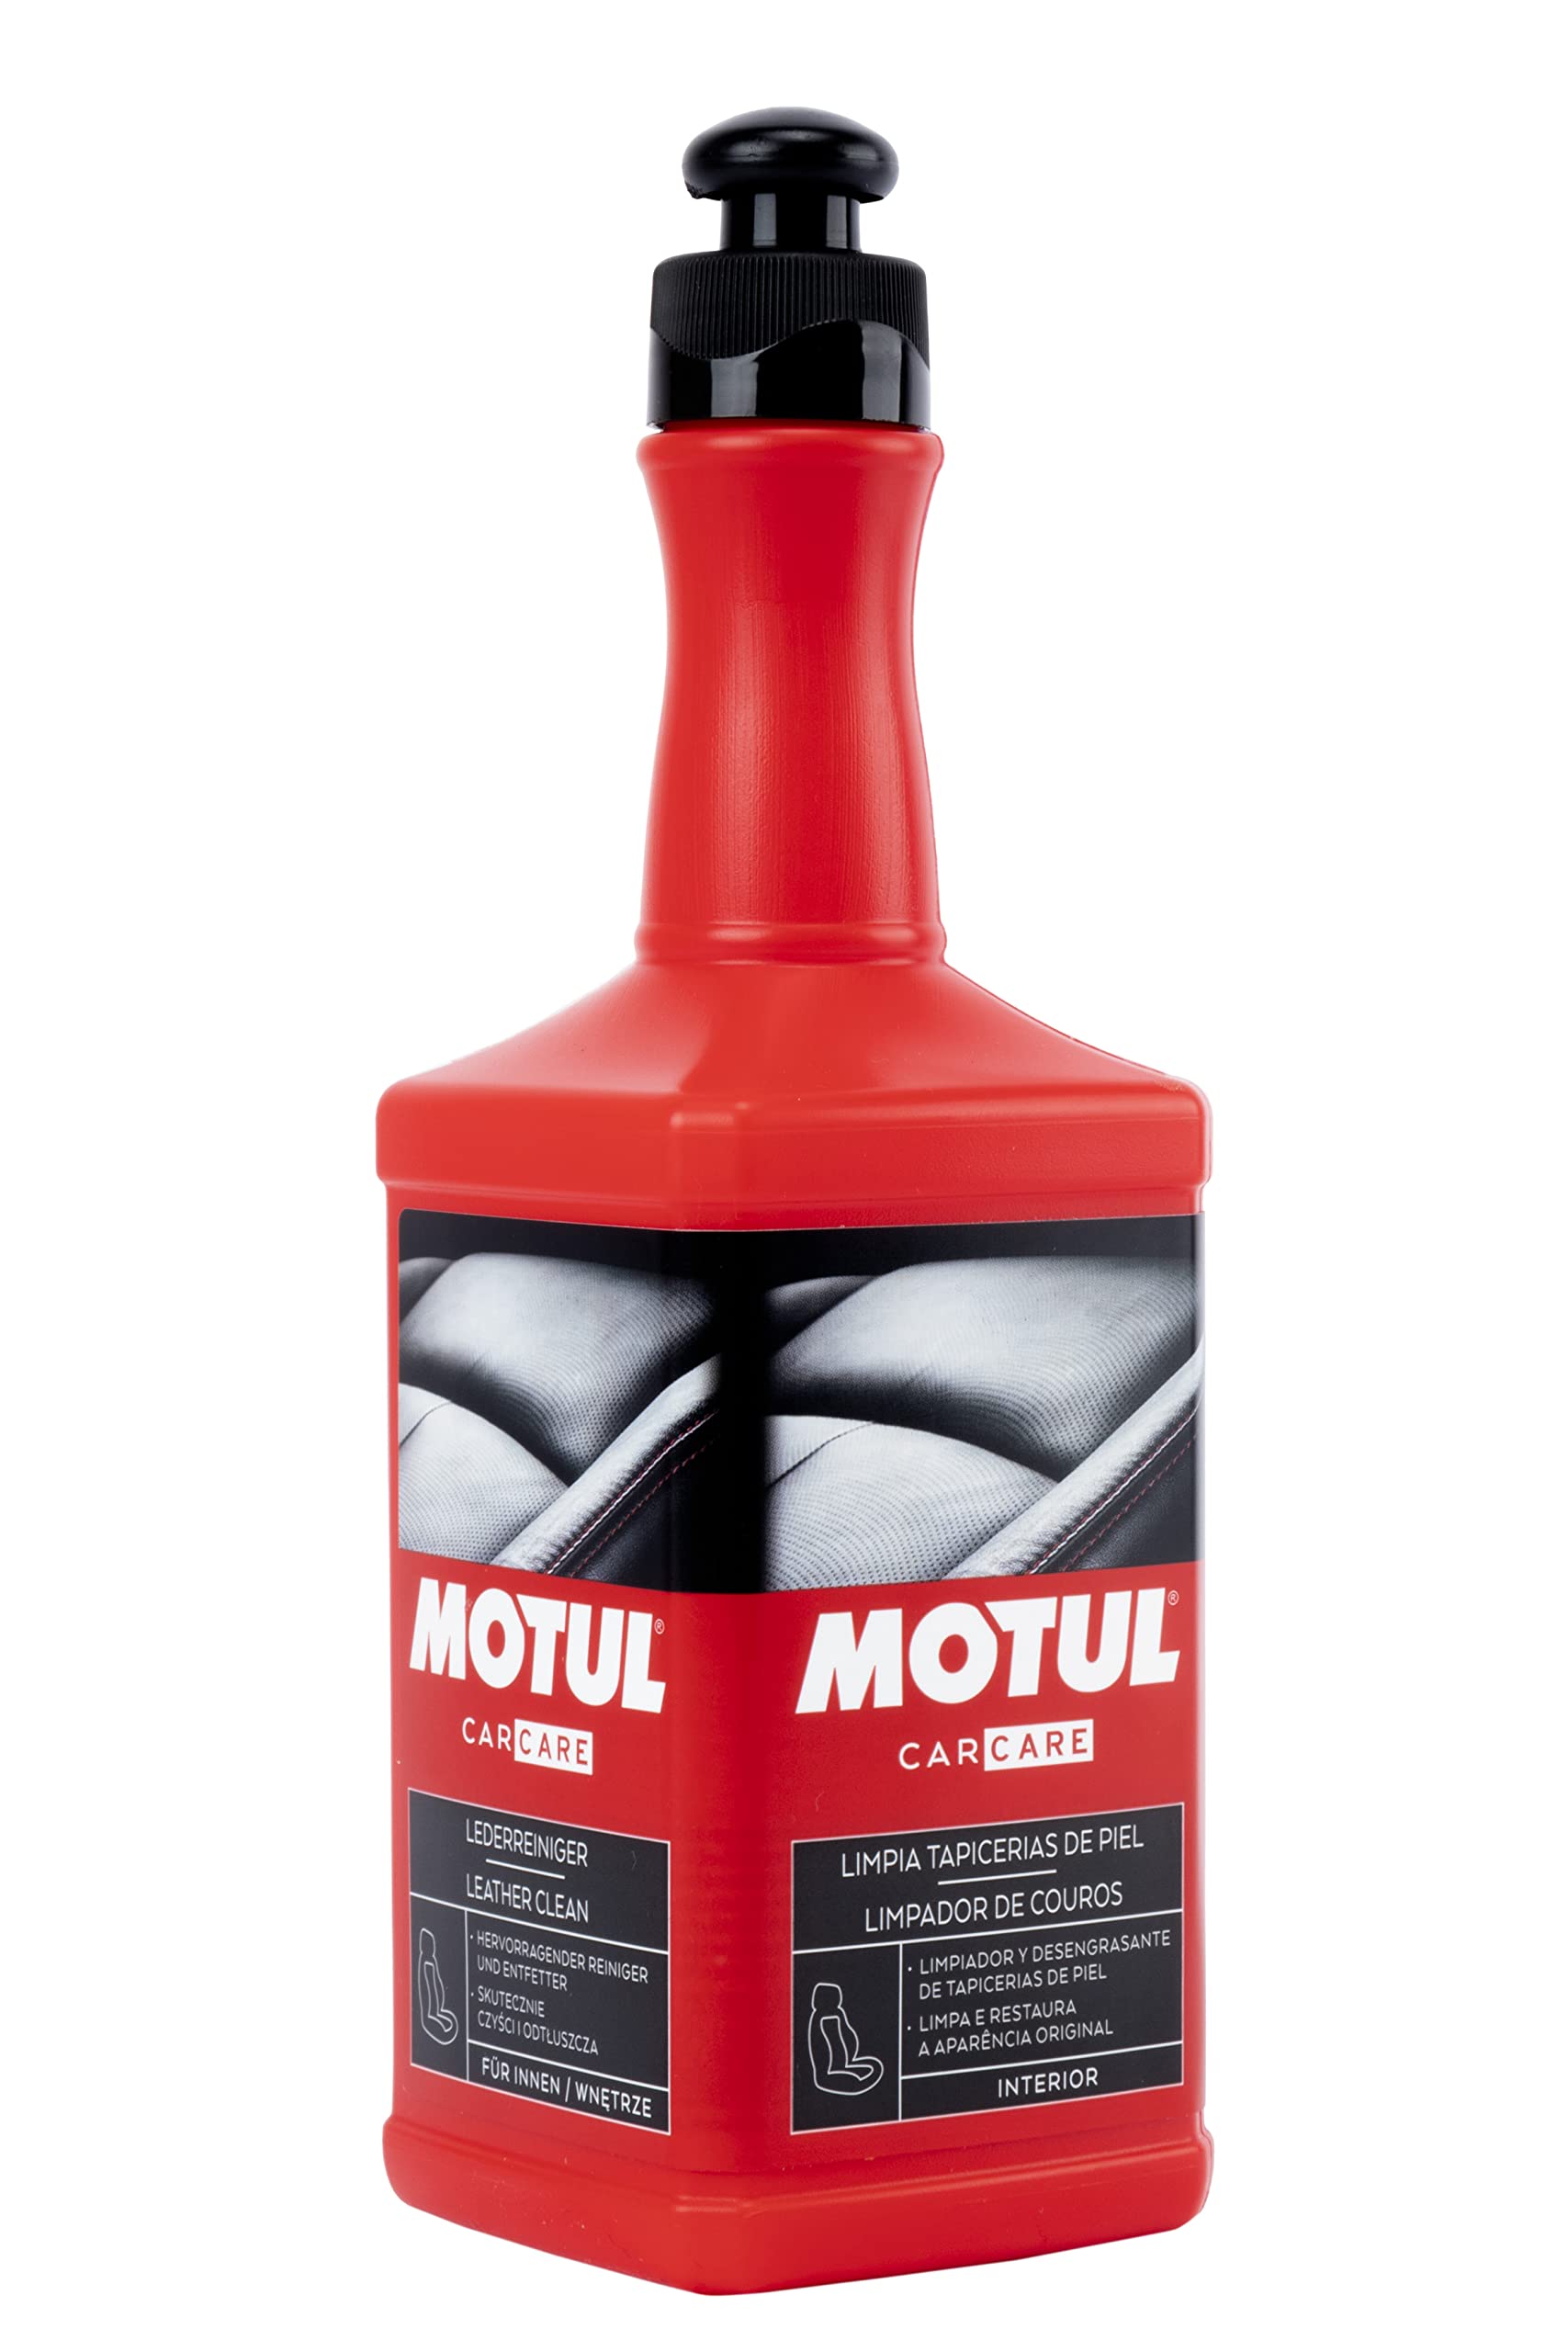 Motul Leder-Polster-Reiniger Motul Car Care 500 ml von Motul